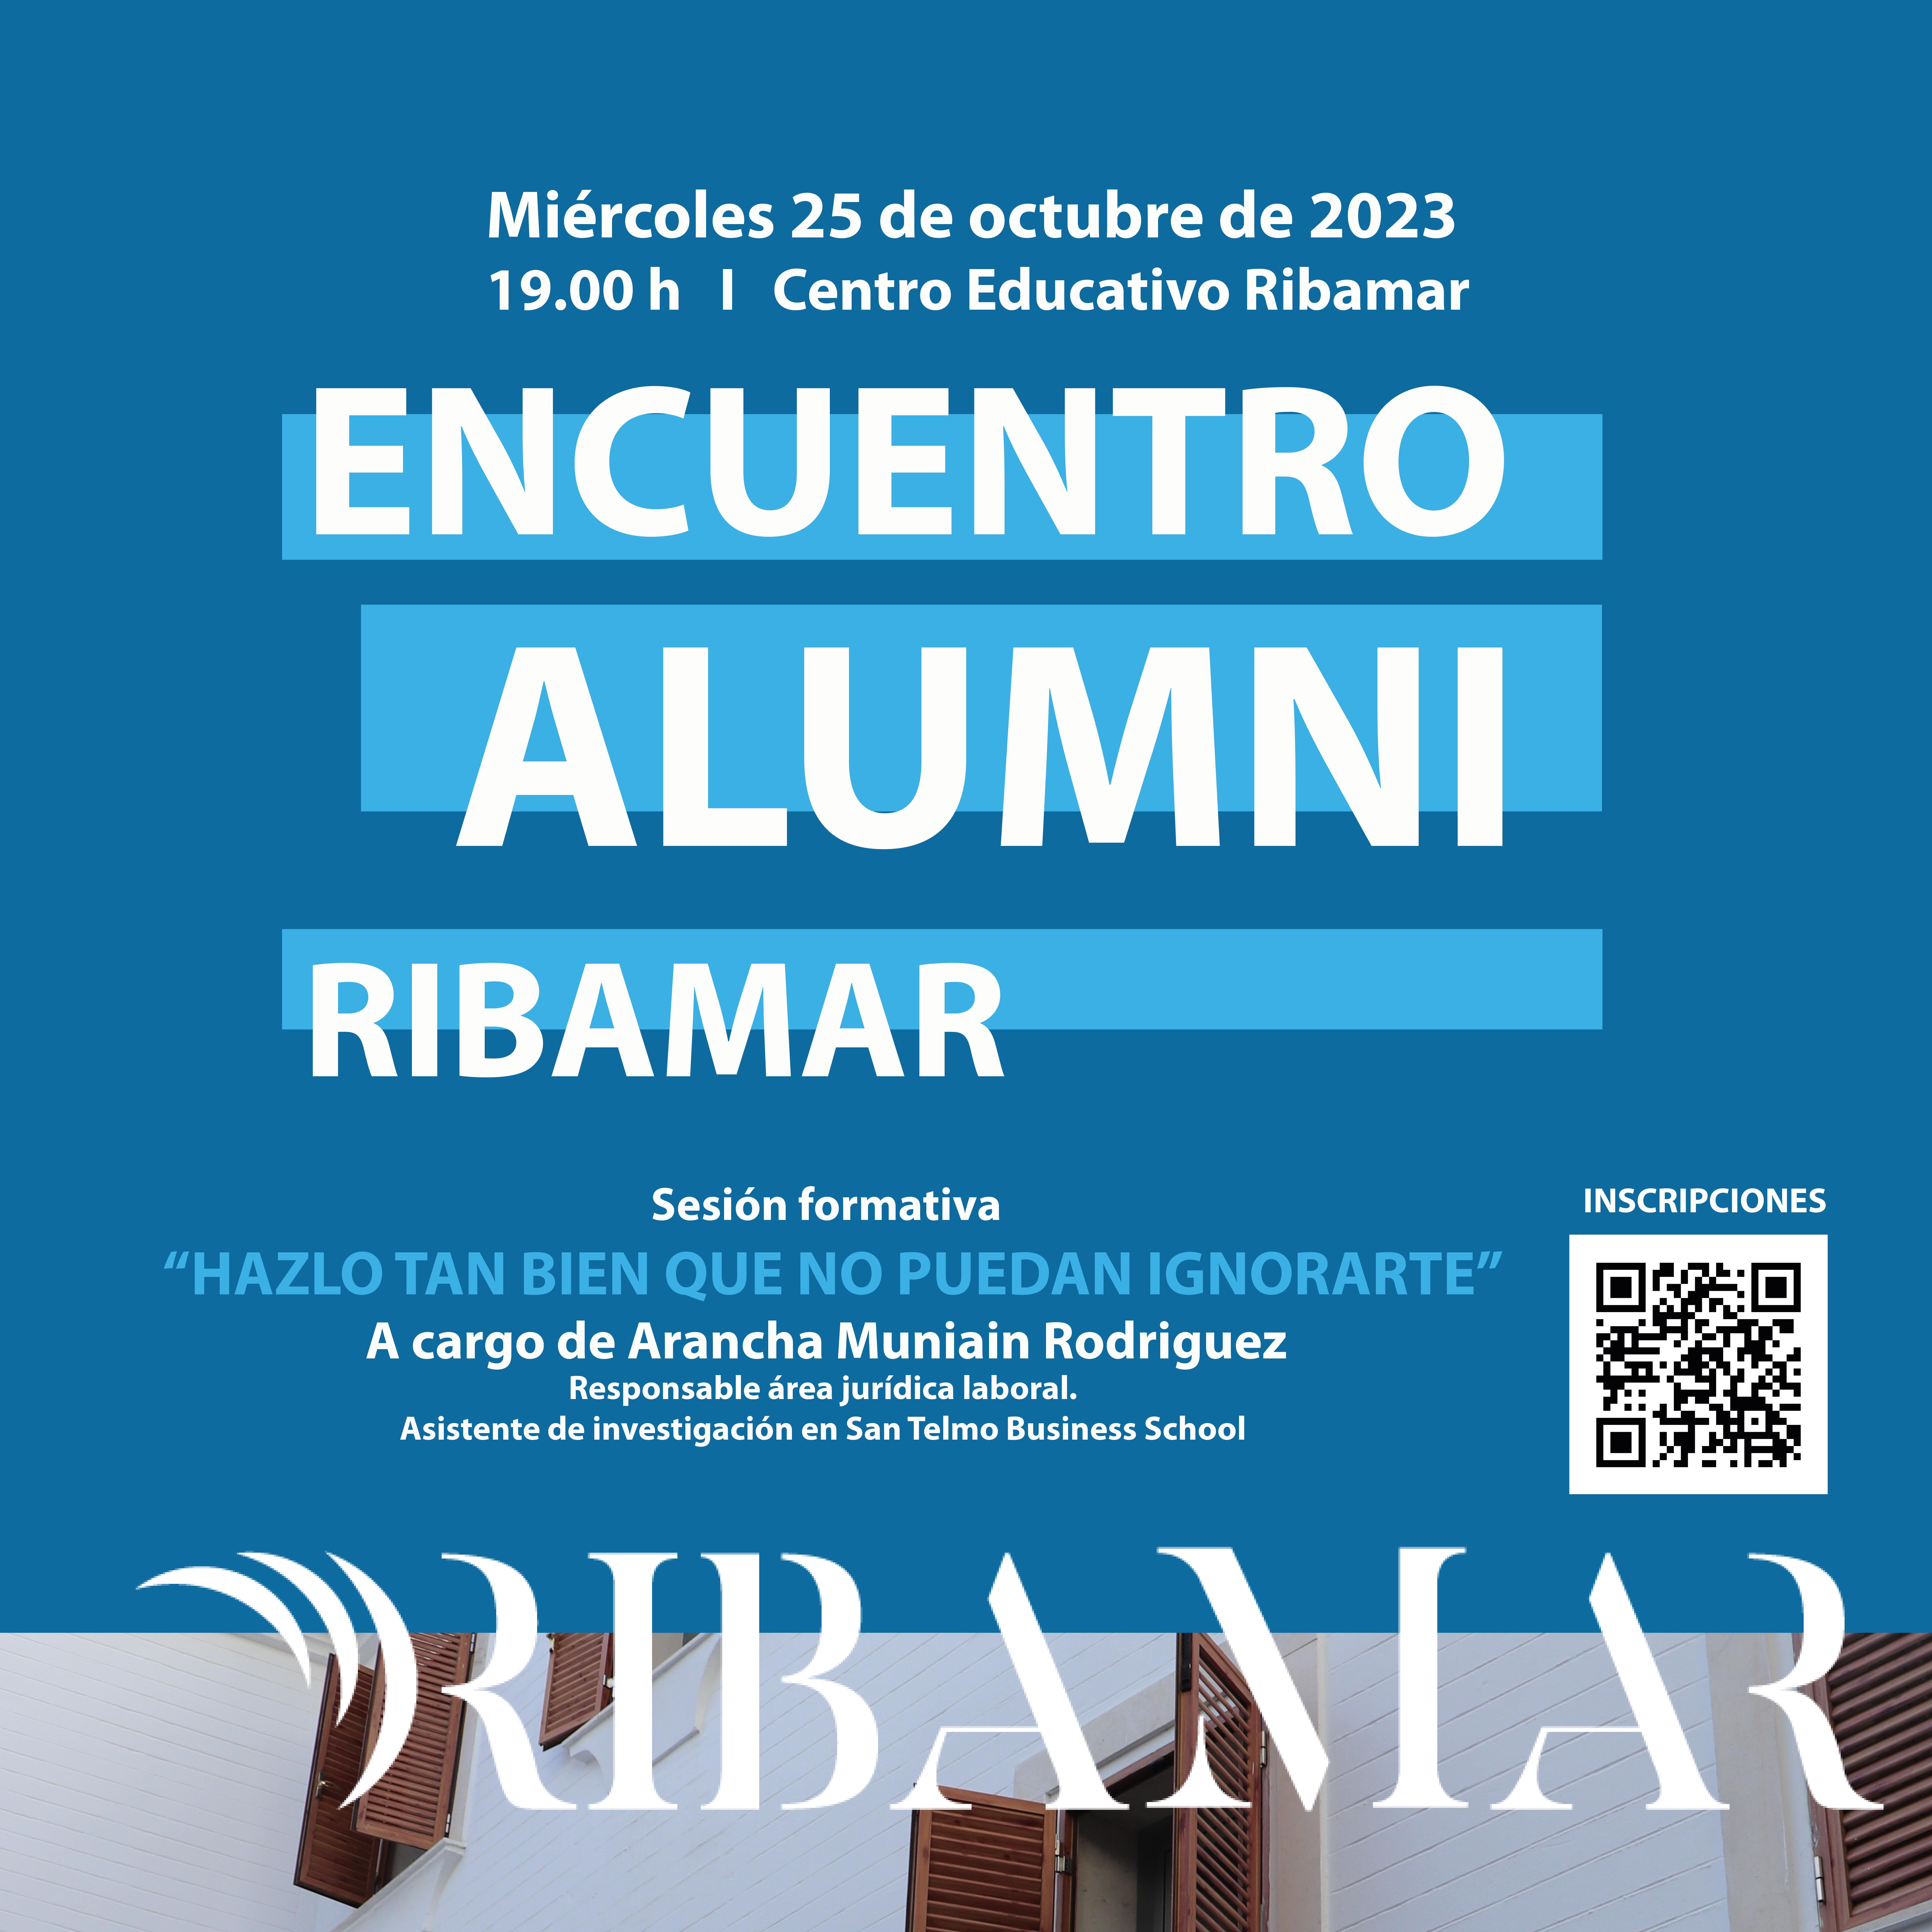 Encuentro Alumni Ribamar curso 2023/24 con Arancha Muniain